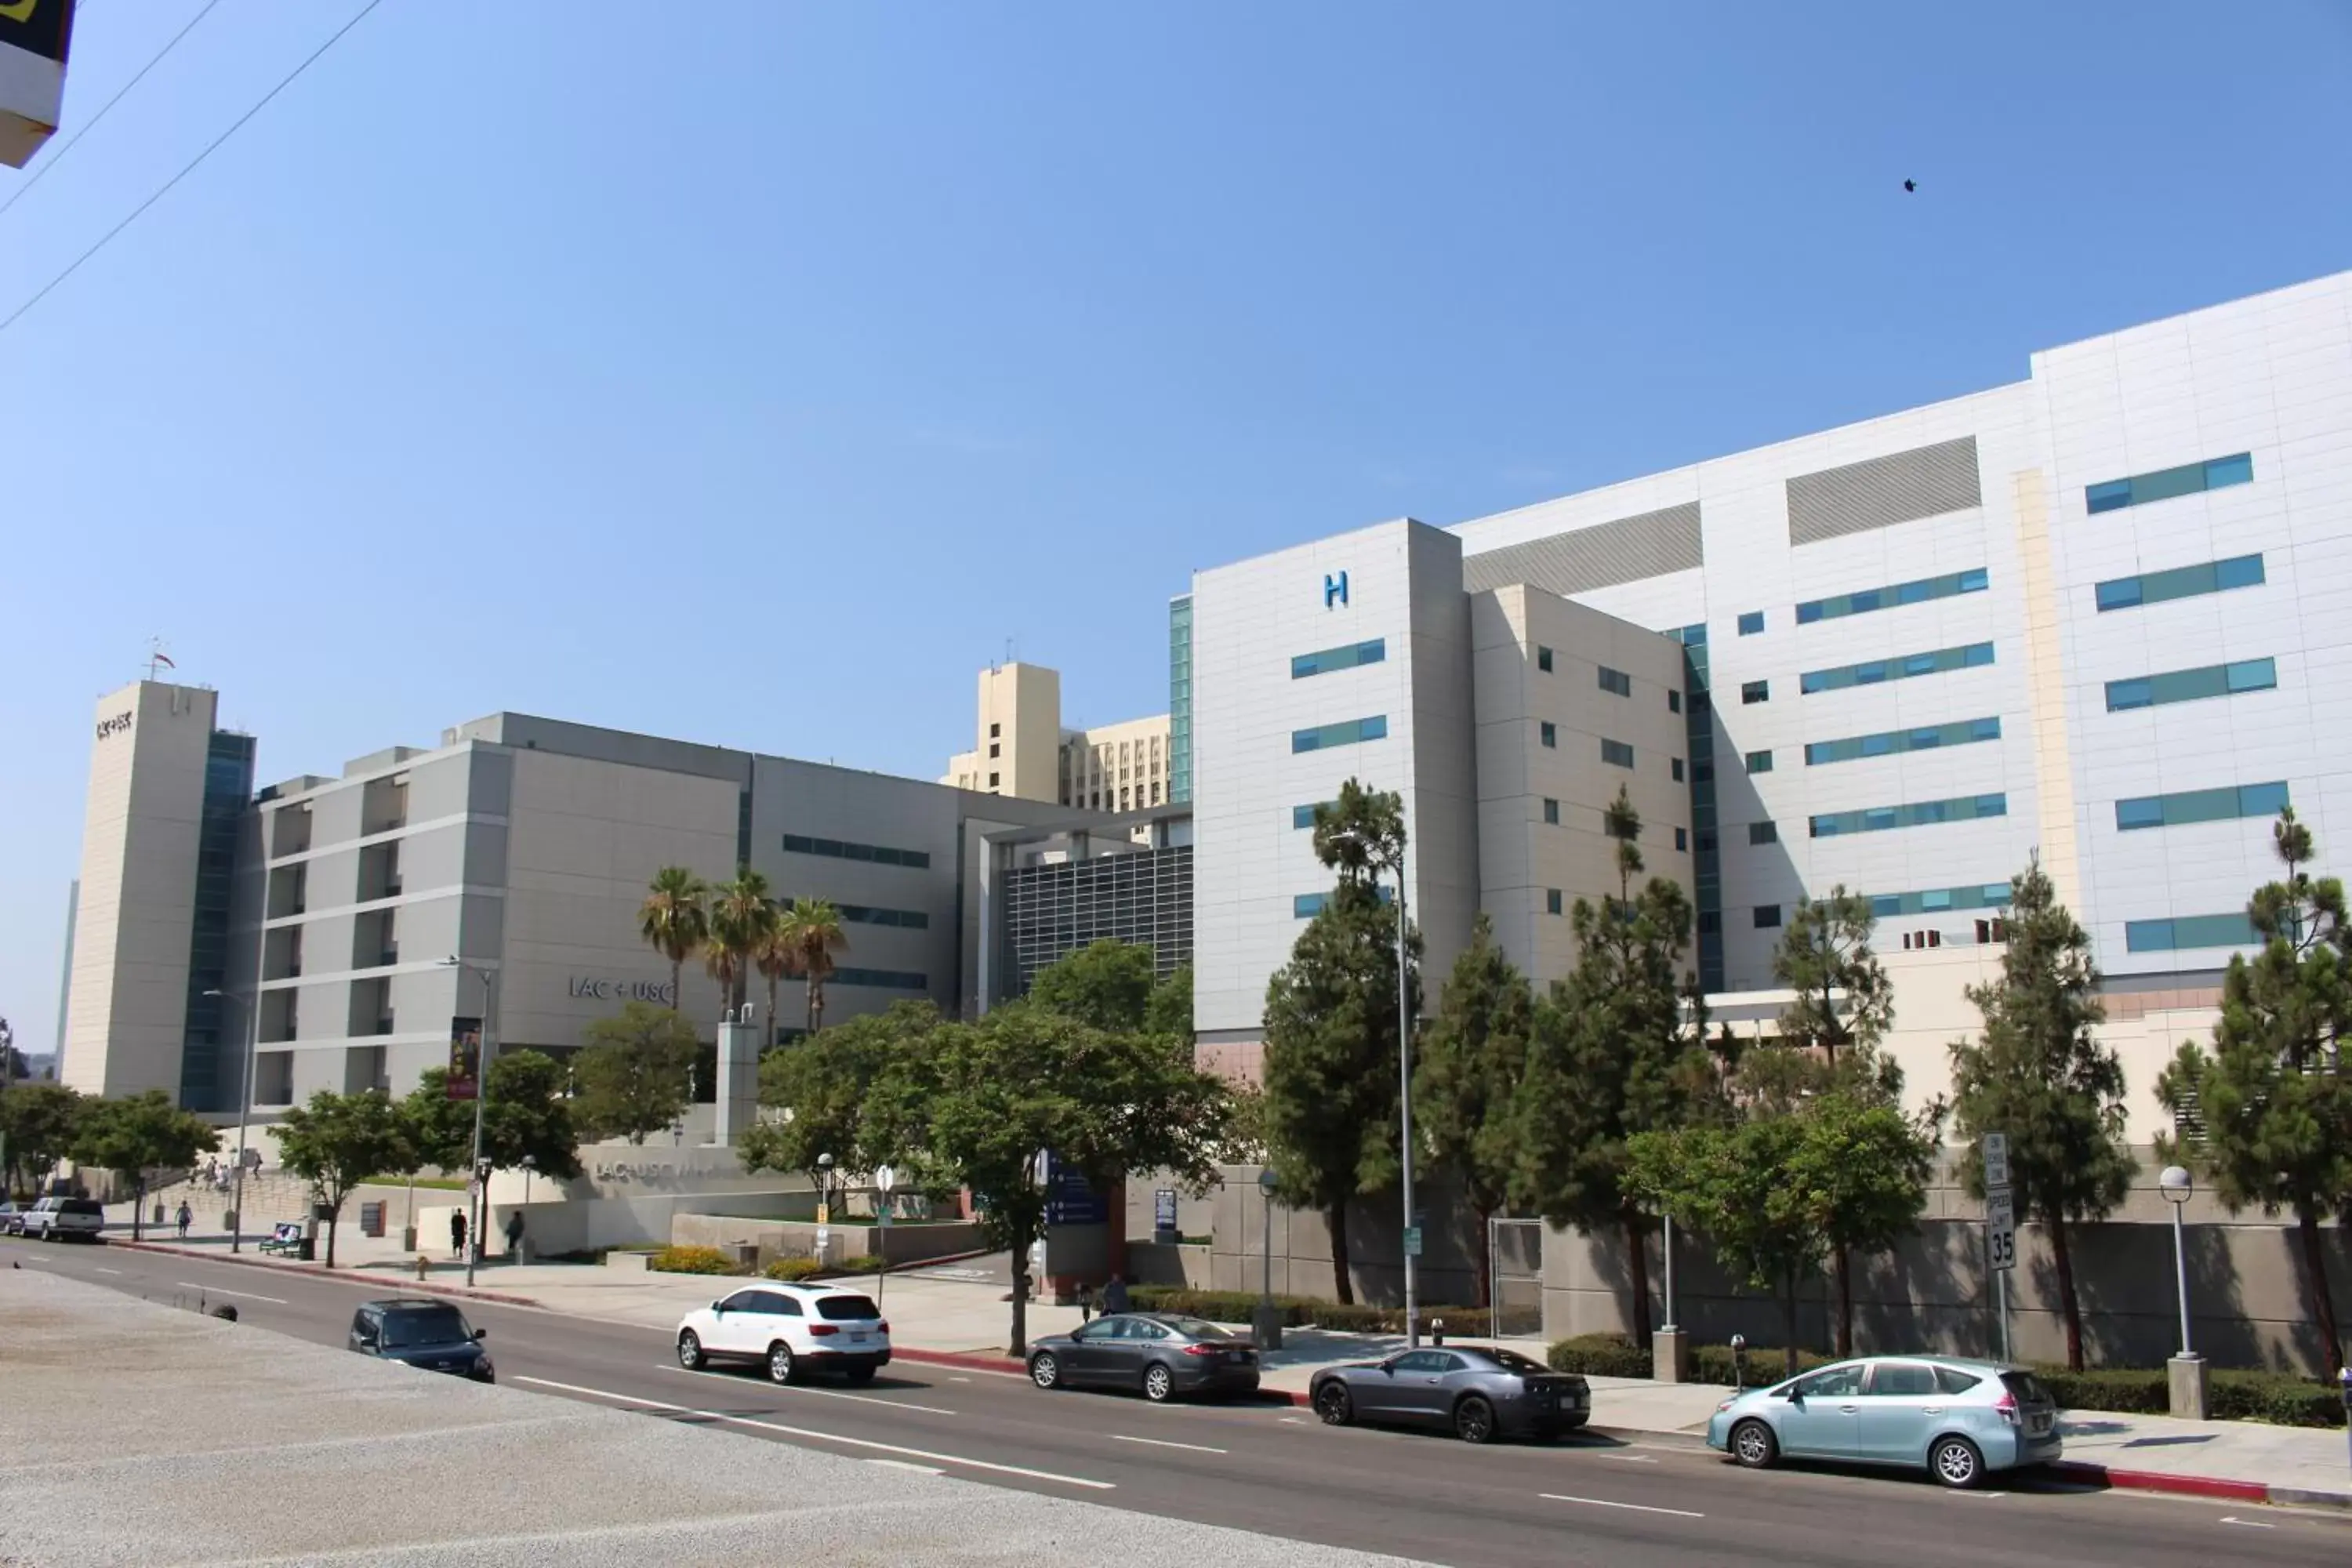 Property Building in ERTH INN by AGA Los Angeles